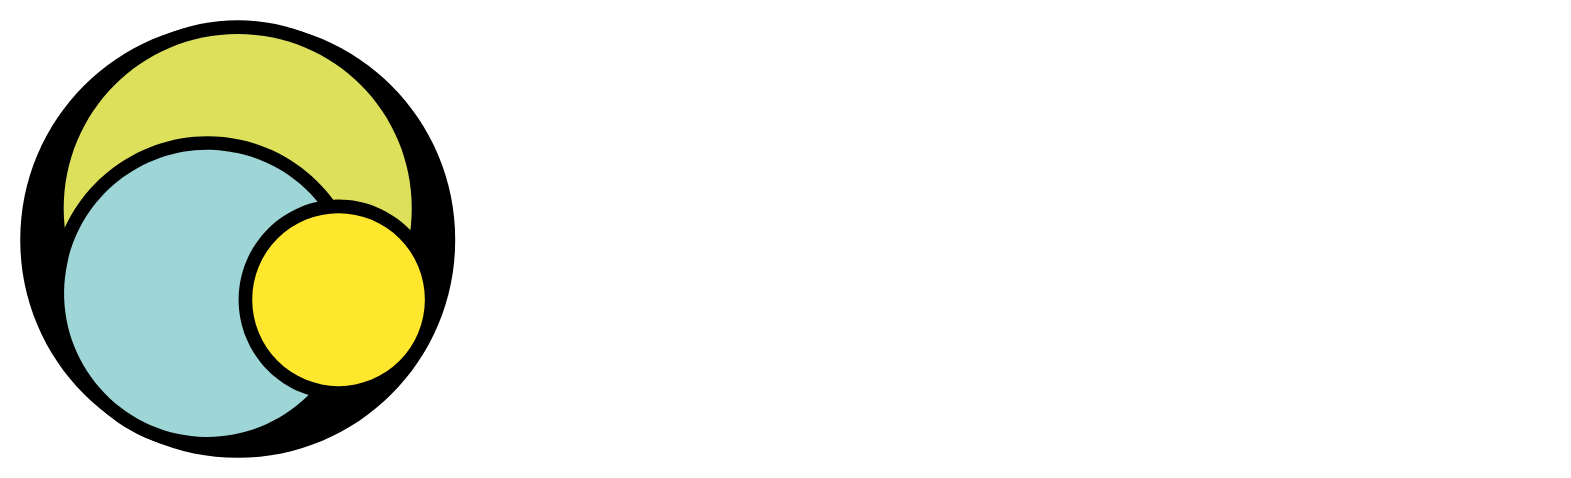 PagSeguro logo grand pour les fonds sombres (PNG transparent)